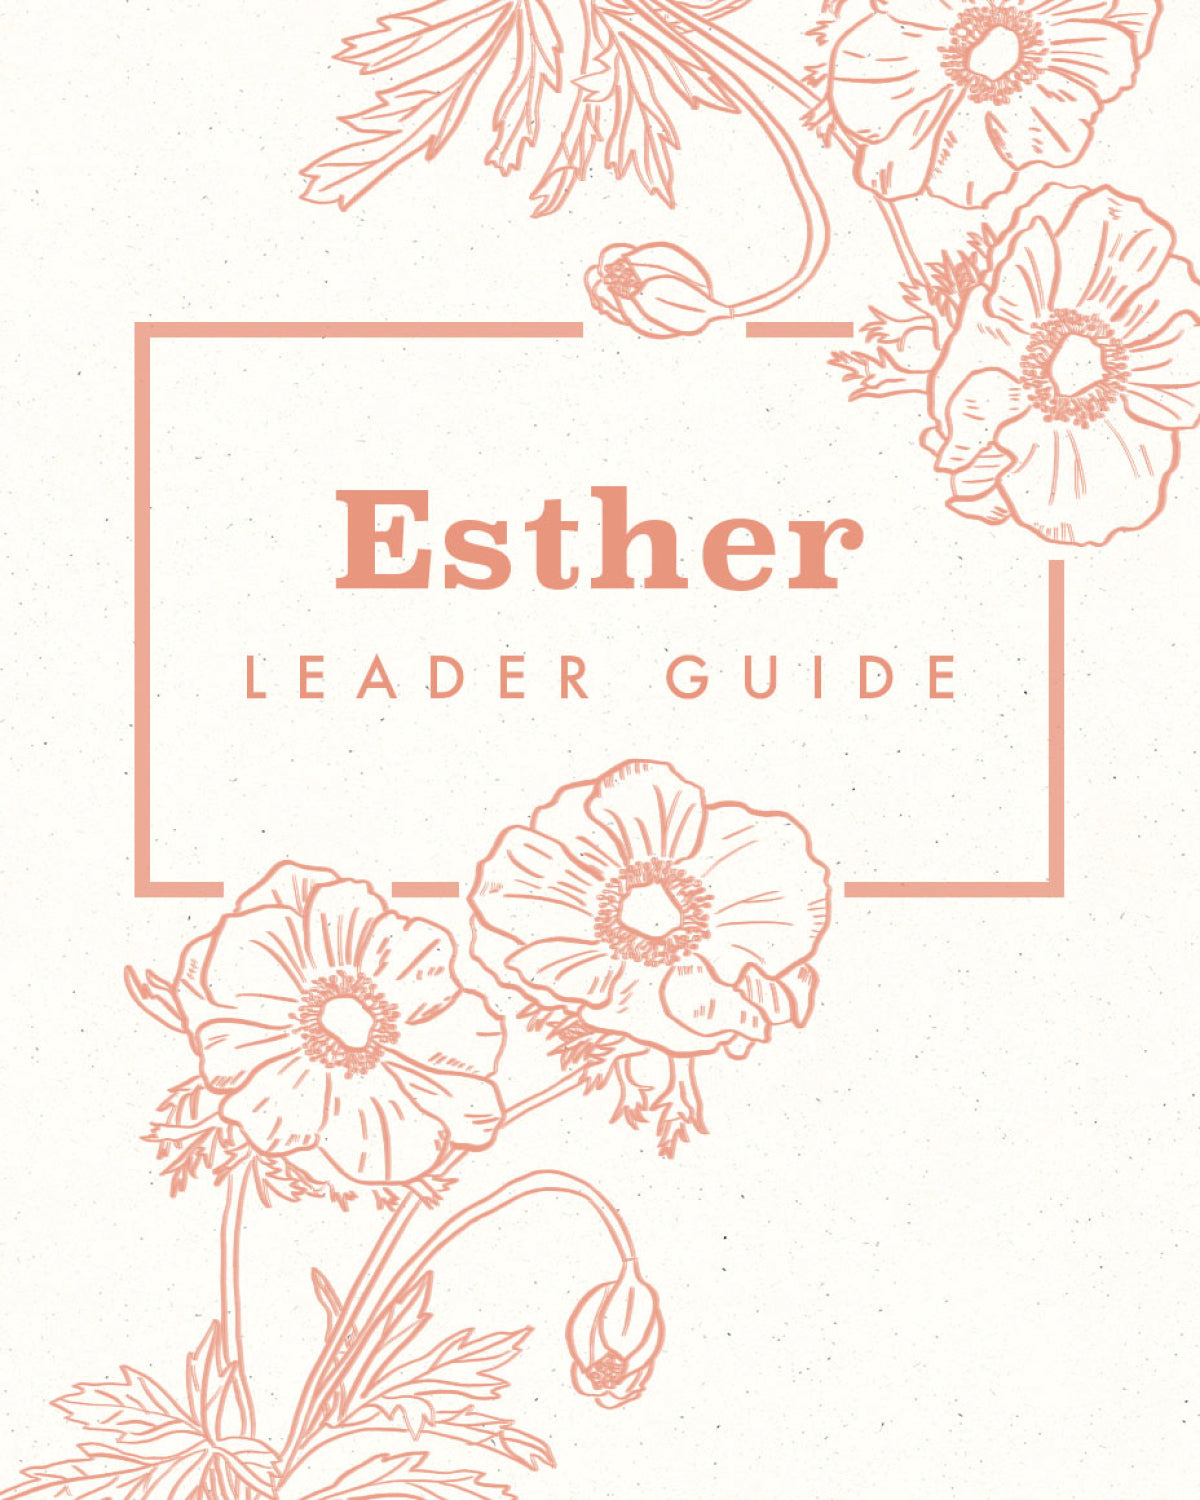 Esther Leader Guide [FREE PDF]